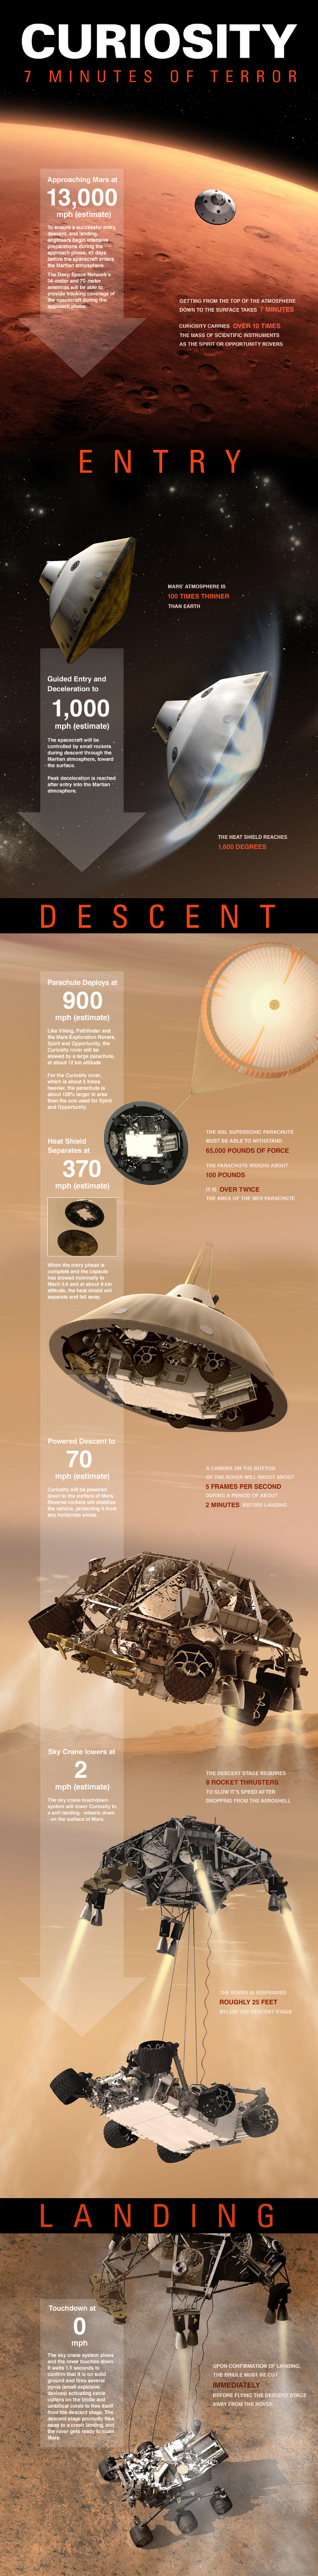 mars-curiosity-landing